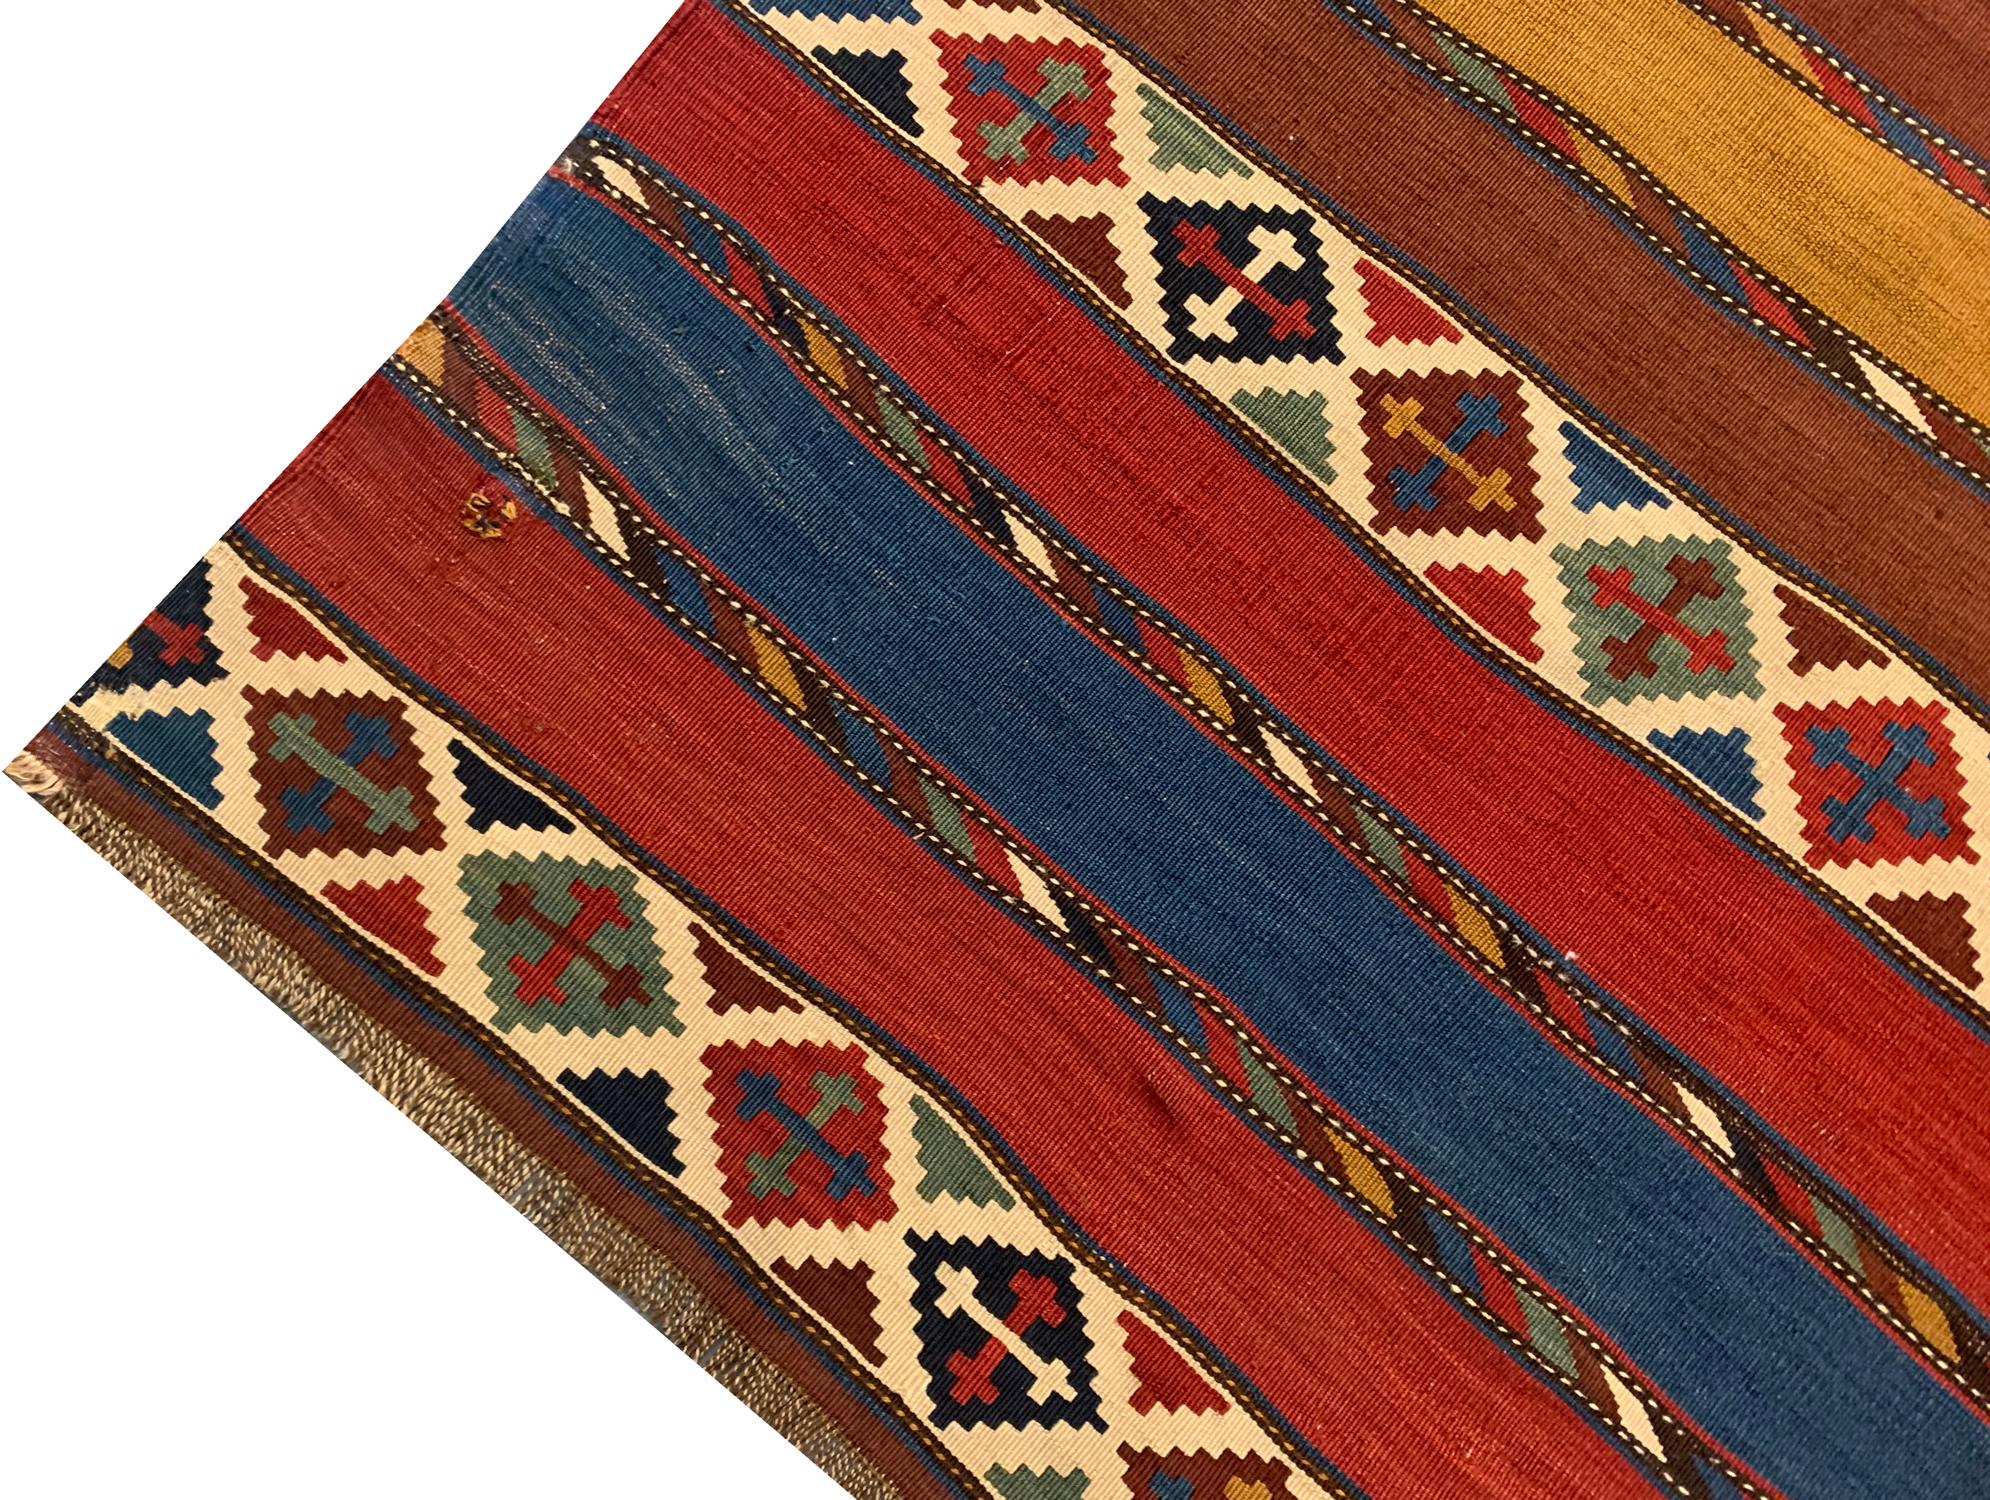 Hand-Crafted Rare Antique Caucasian Kilim Rug, Striped Kilim Traditional Wool Carpet